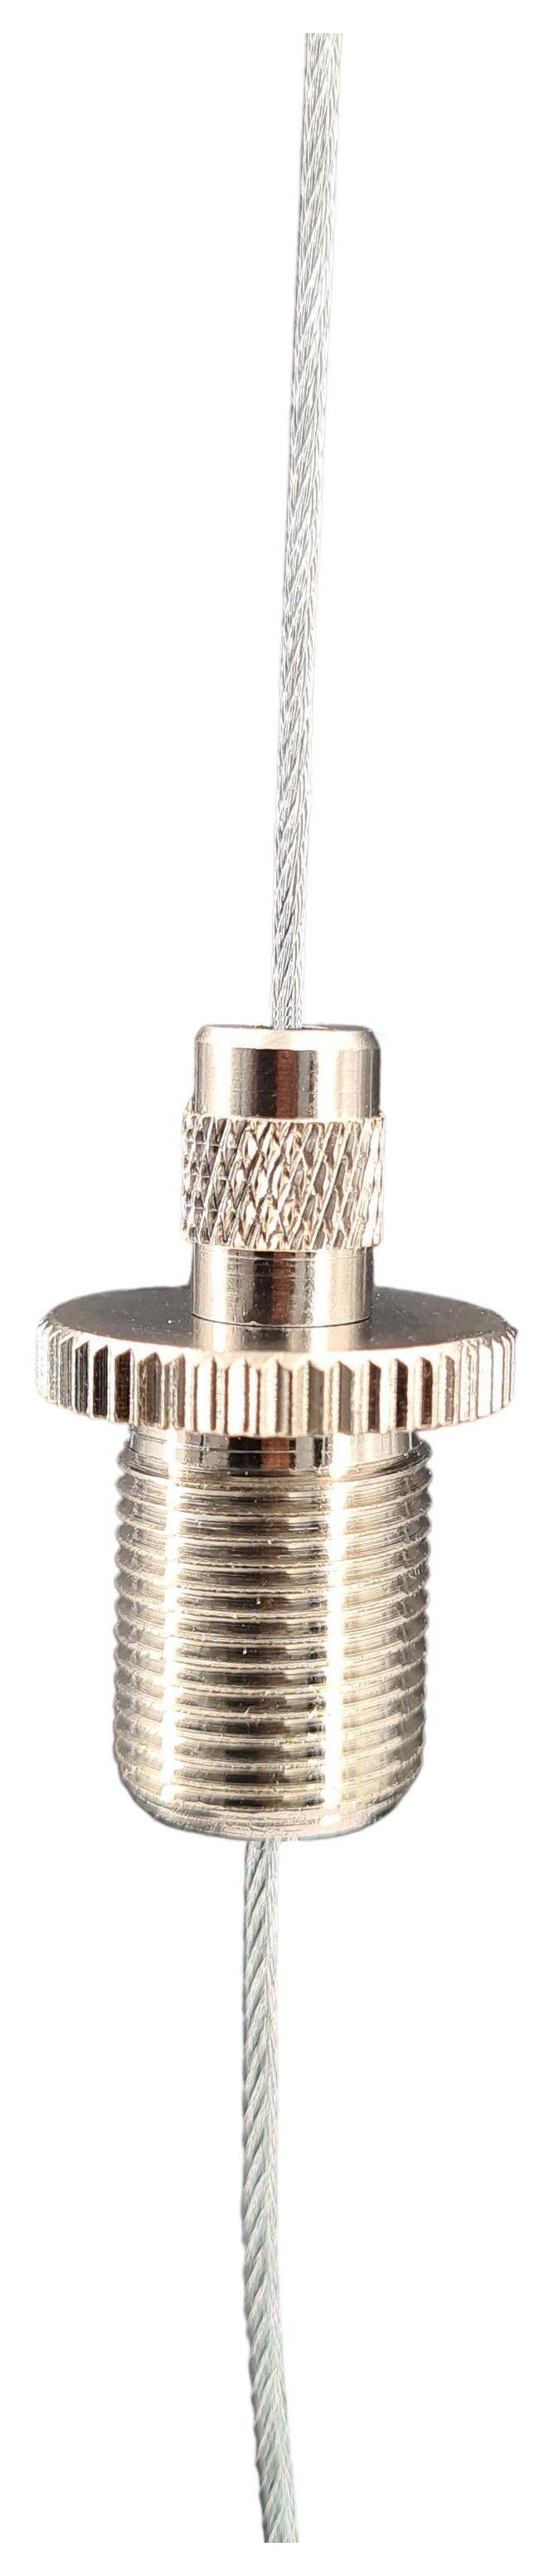 brass cableblocker with knurled collar + cap 19x20 M13x1x17 male nickel